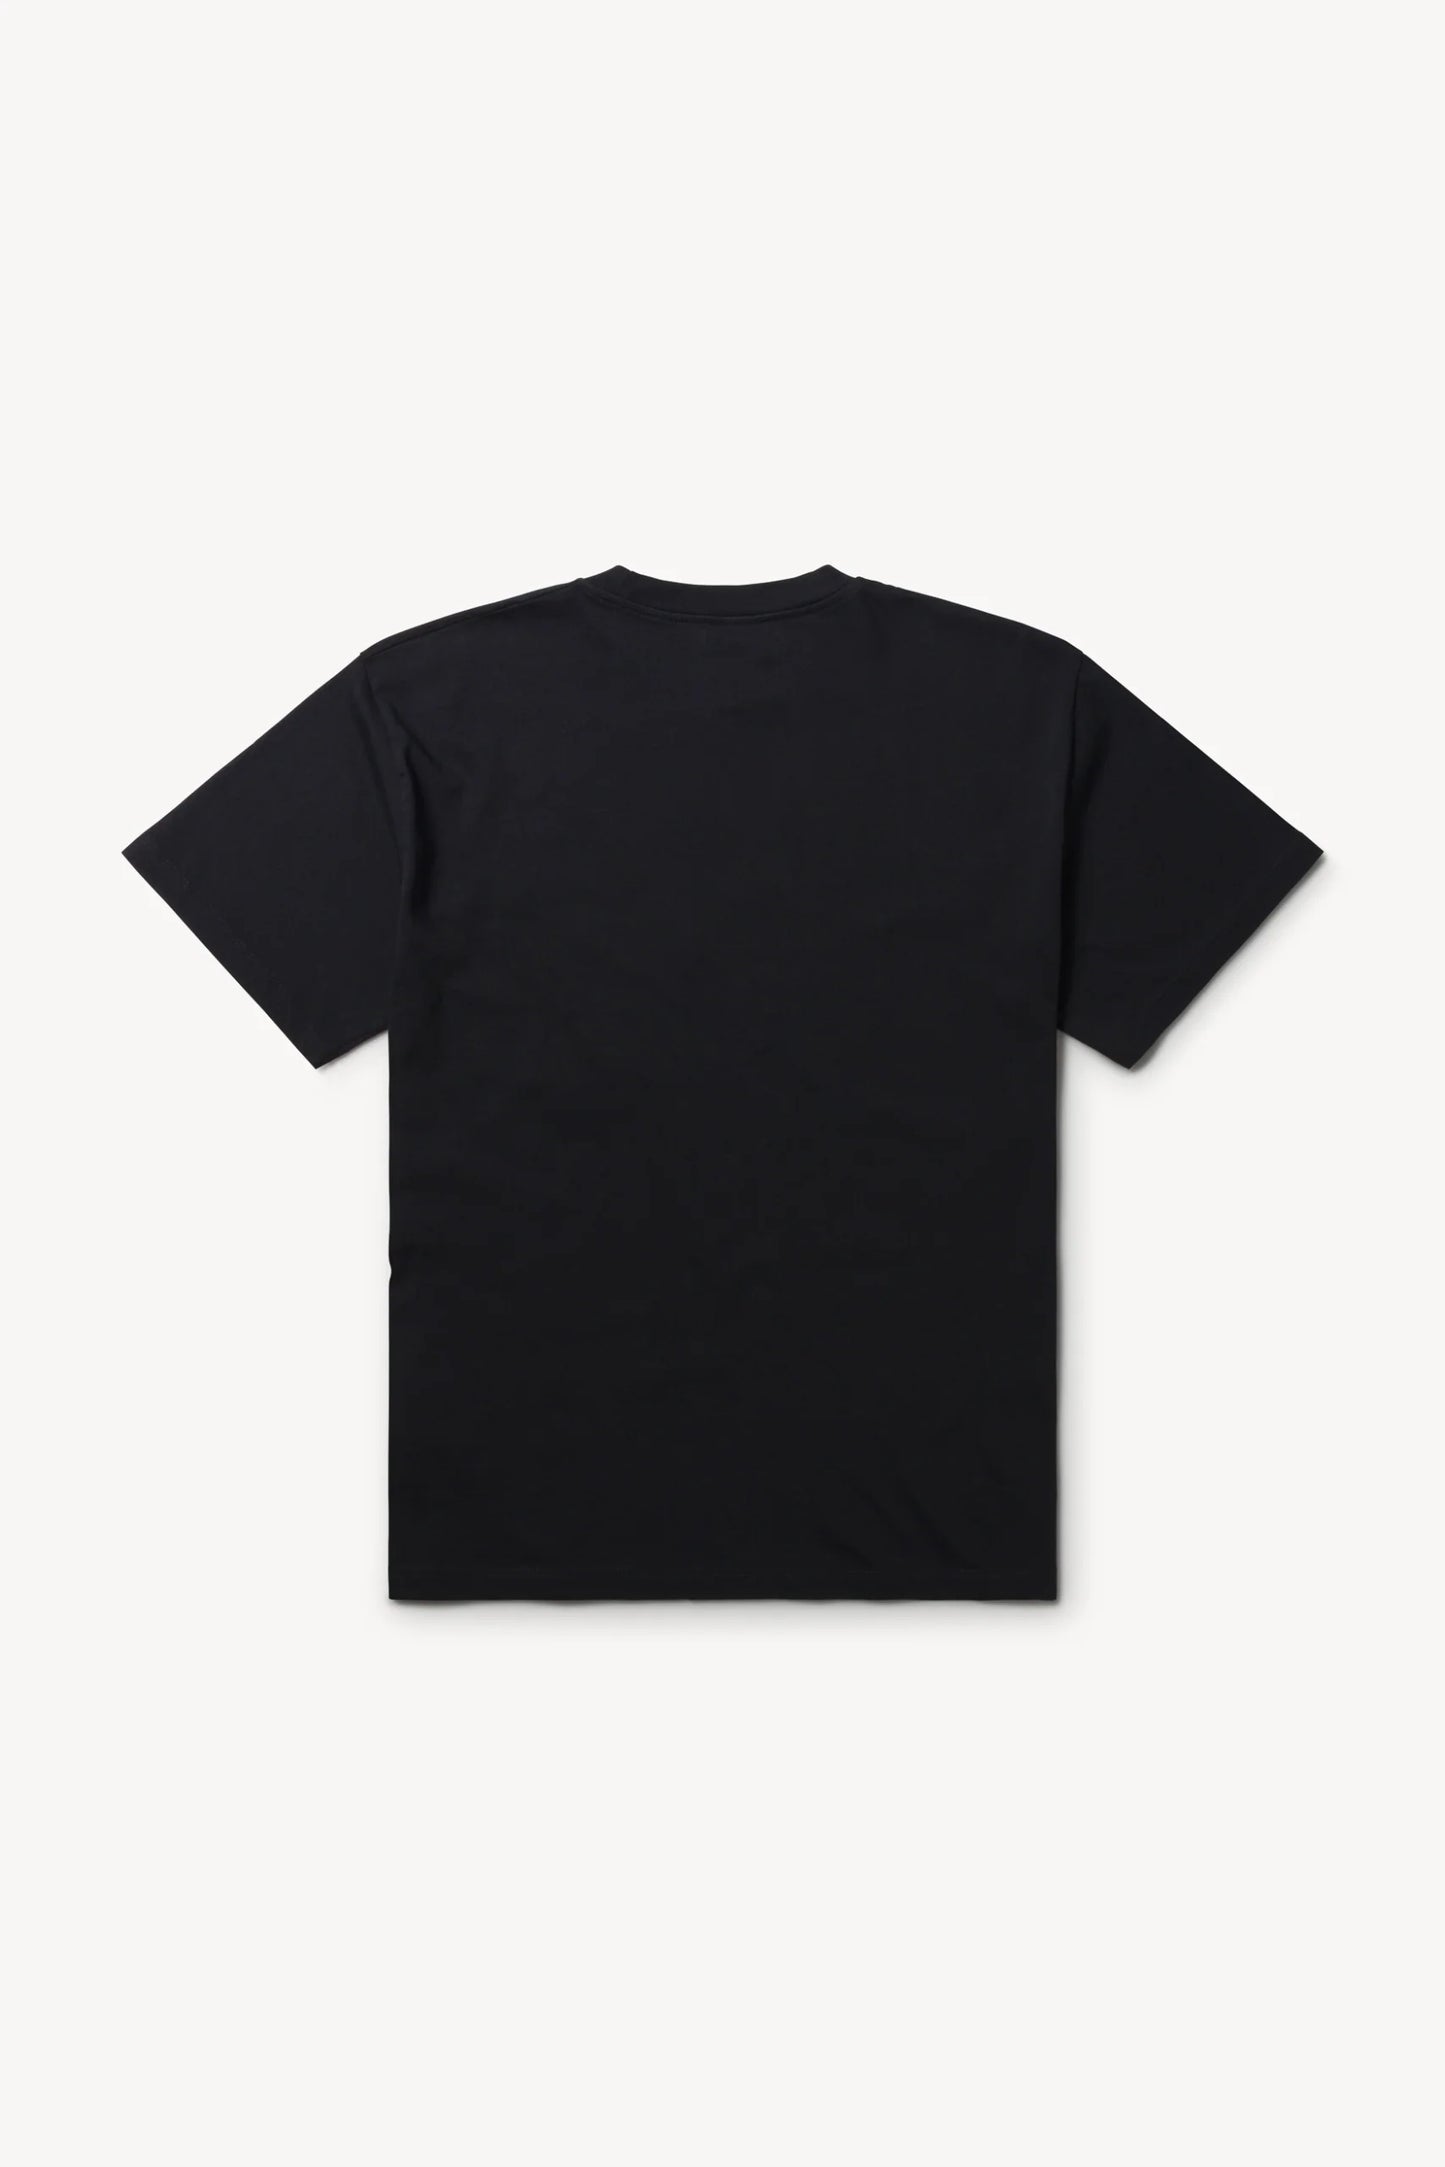 Mini No Problemo, Black, T-Shirt